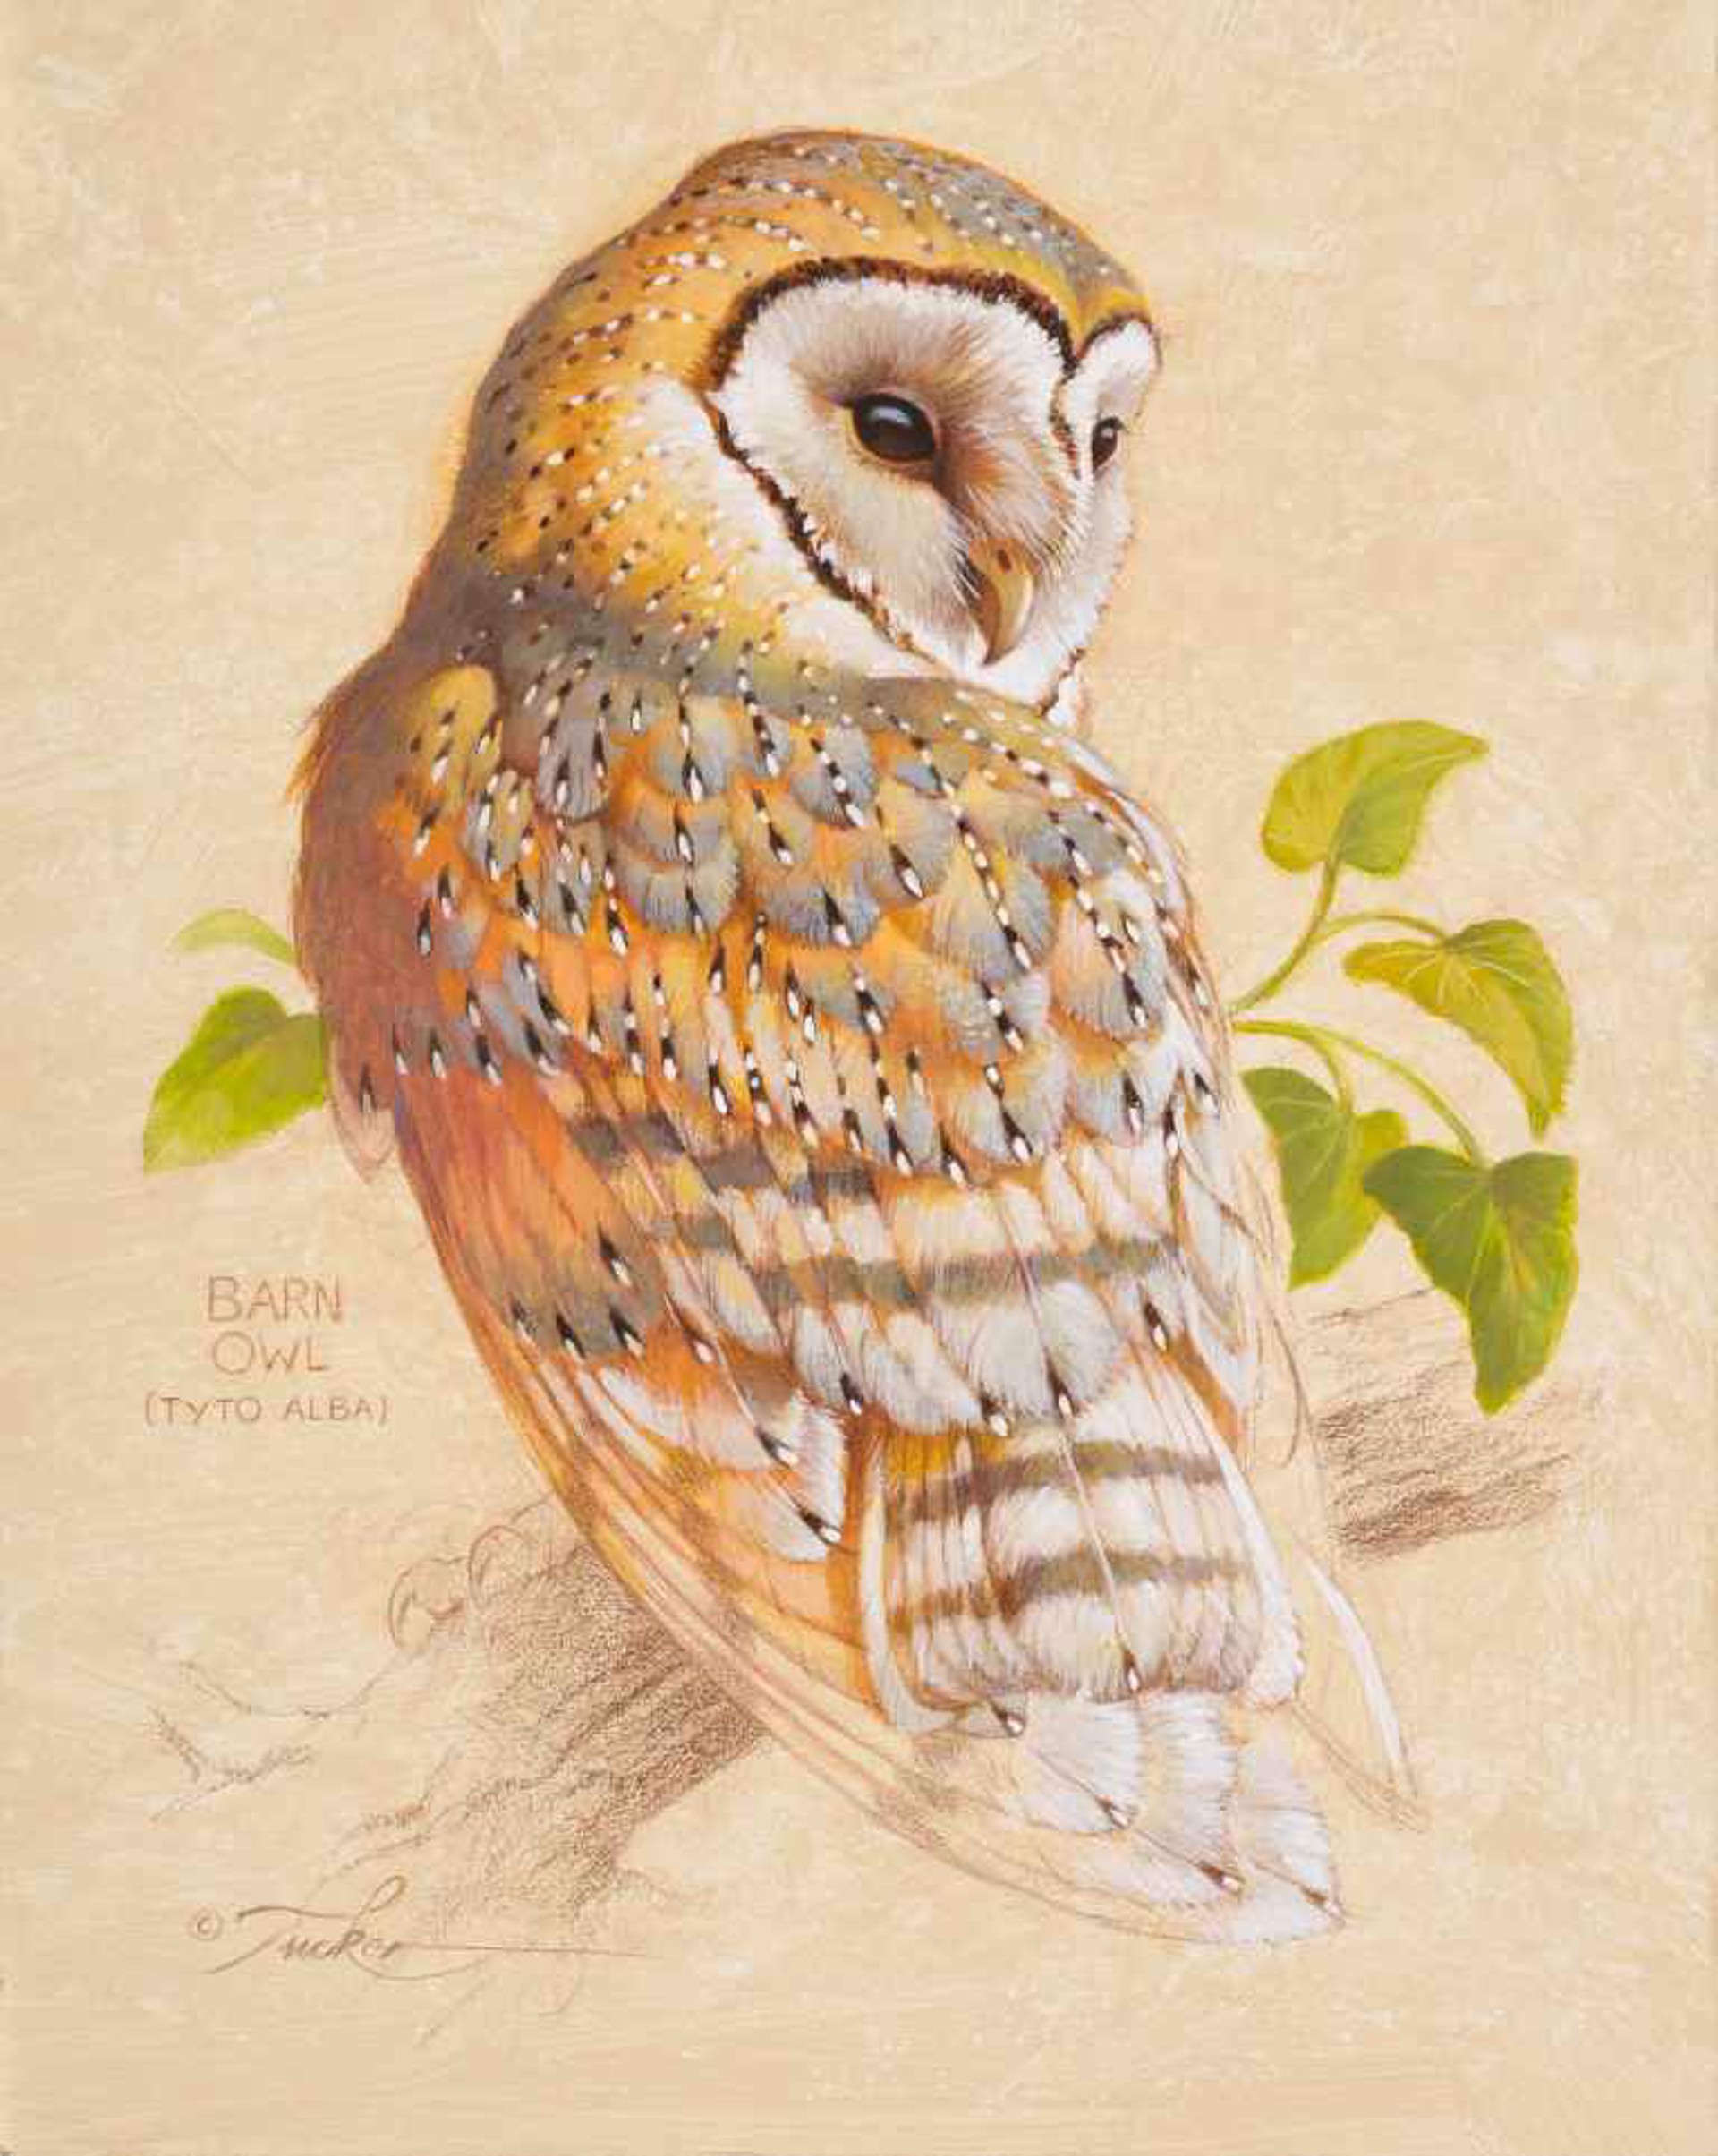 Barn Owl by Ezra Tucker